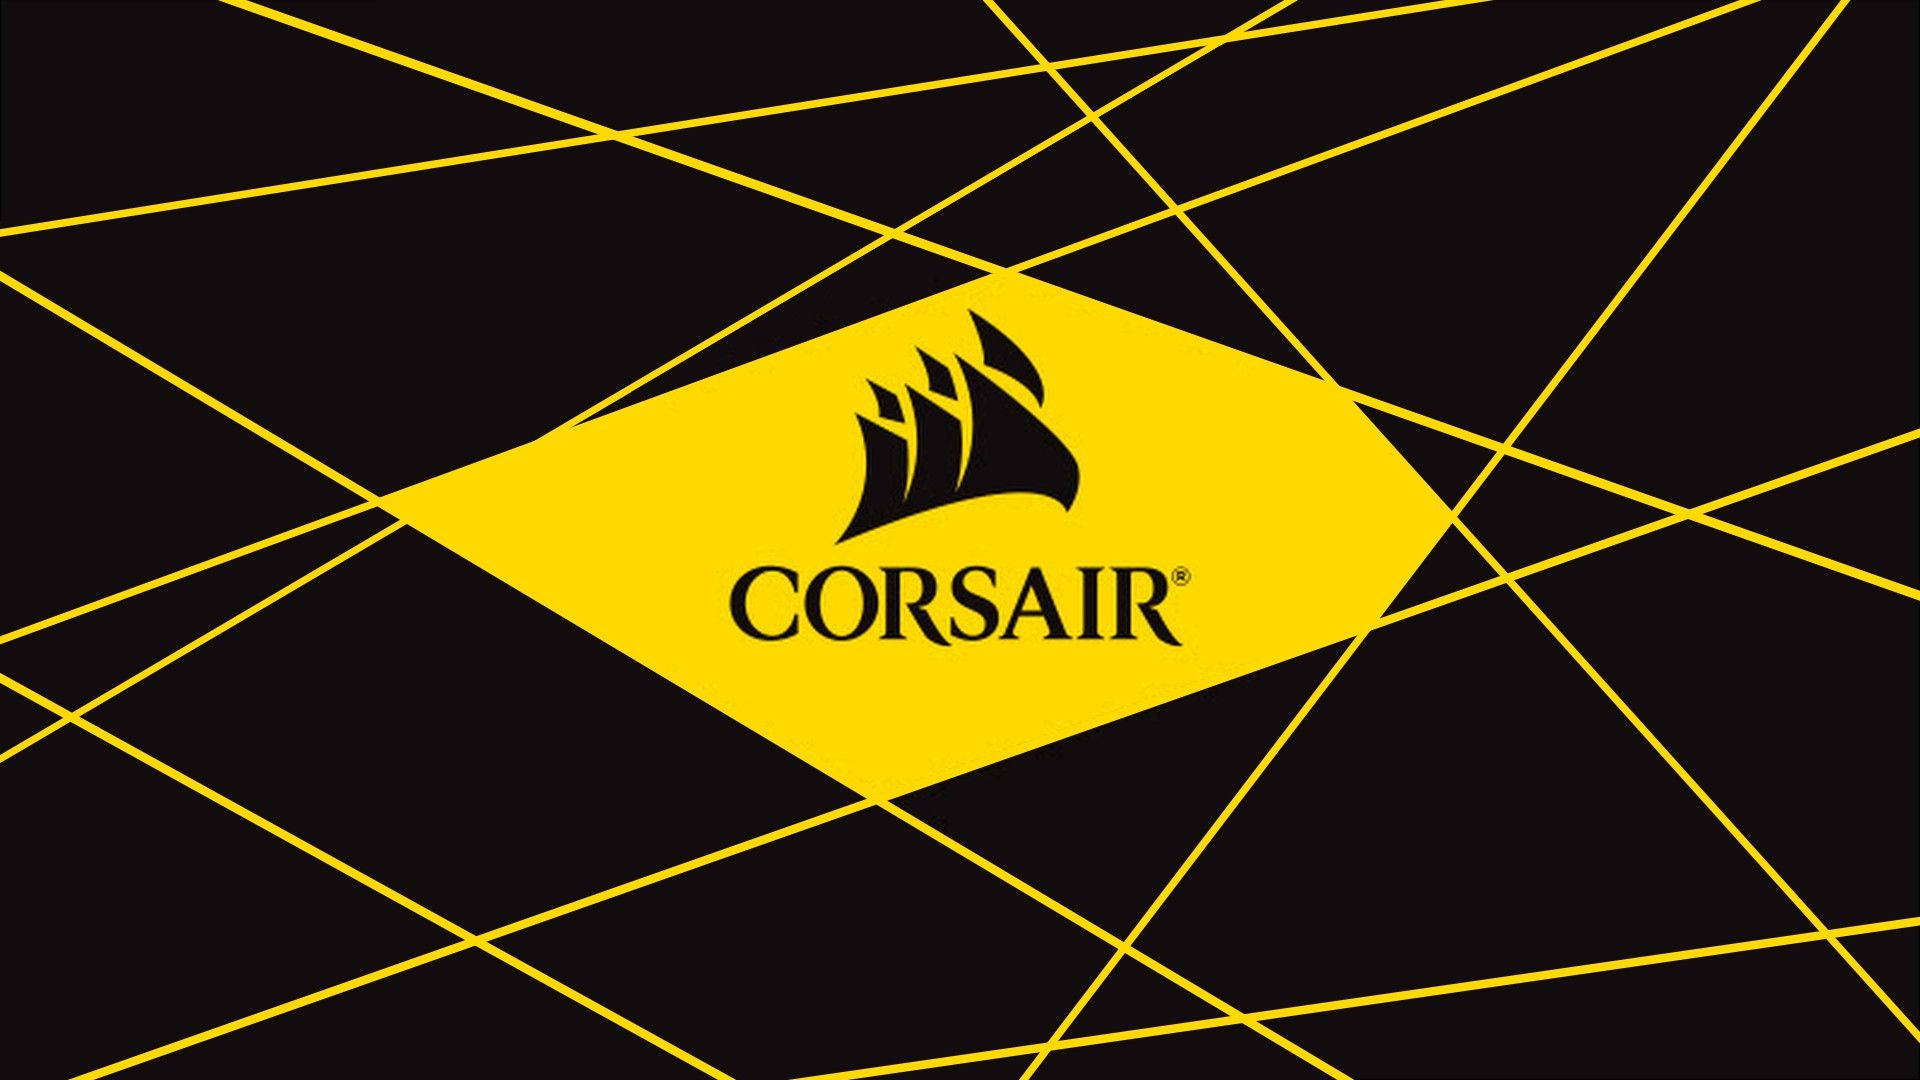 Free Corsair Wallpaper Downloads, [100+] Corsair Wallpapers for FREE |  